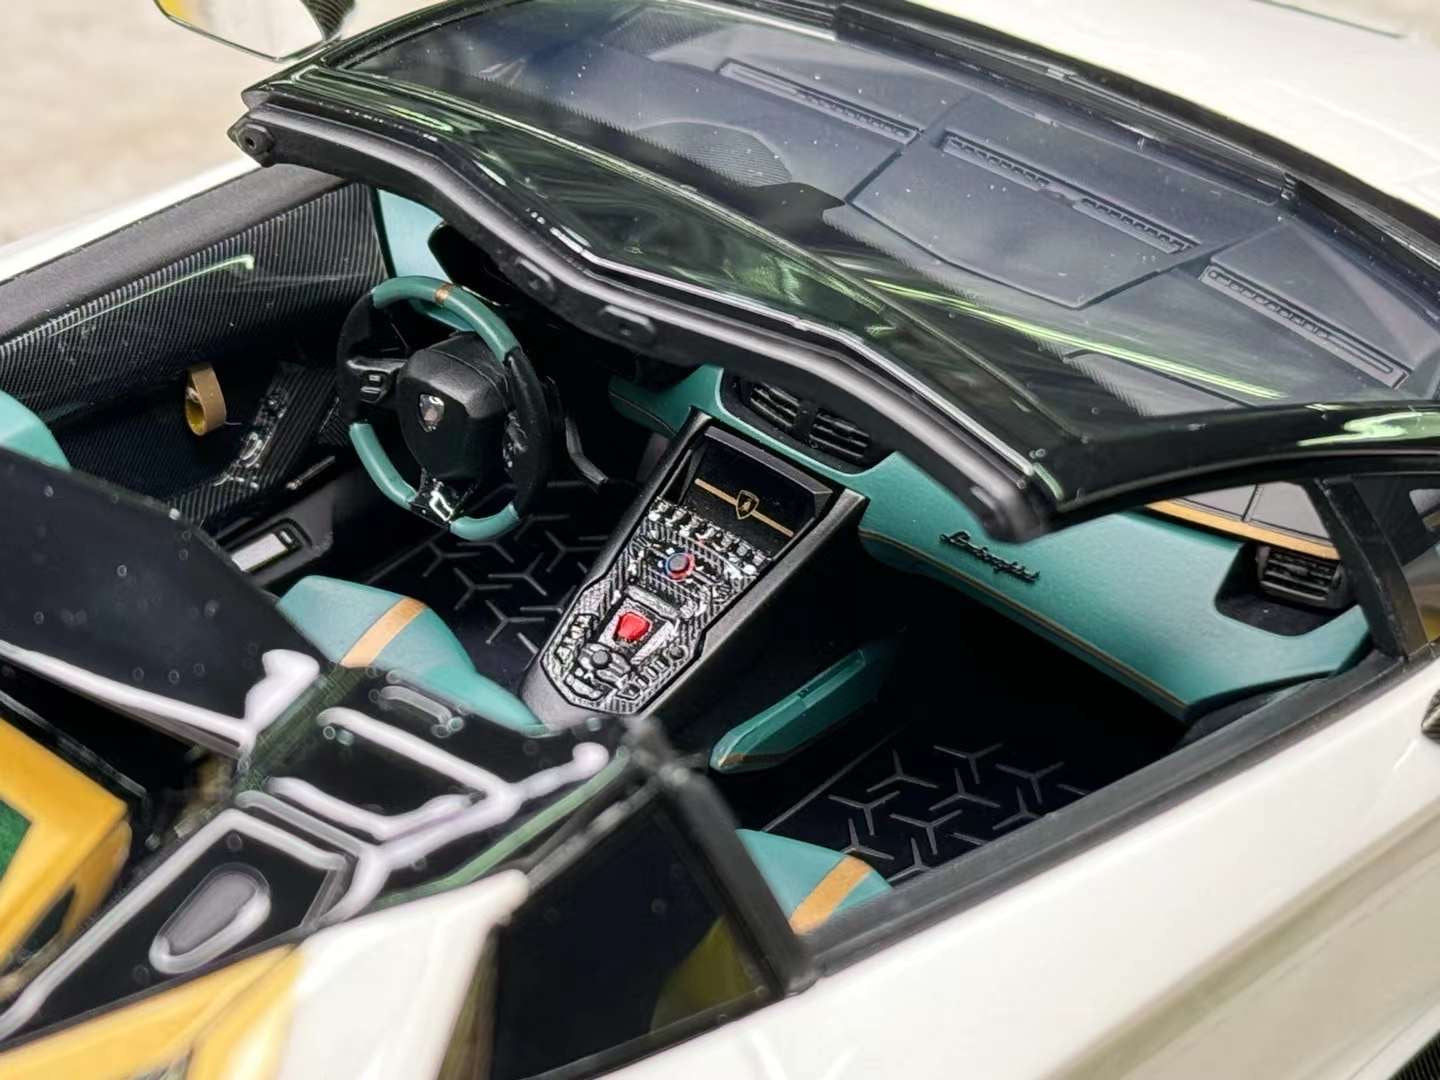 MakeUp Eidolon 1/43 Lamborghini Veneno – IronCookie Diecasts